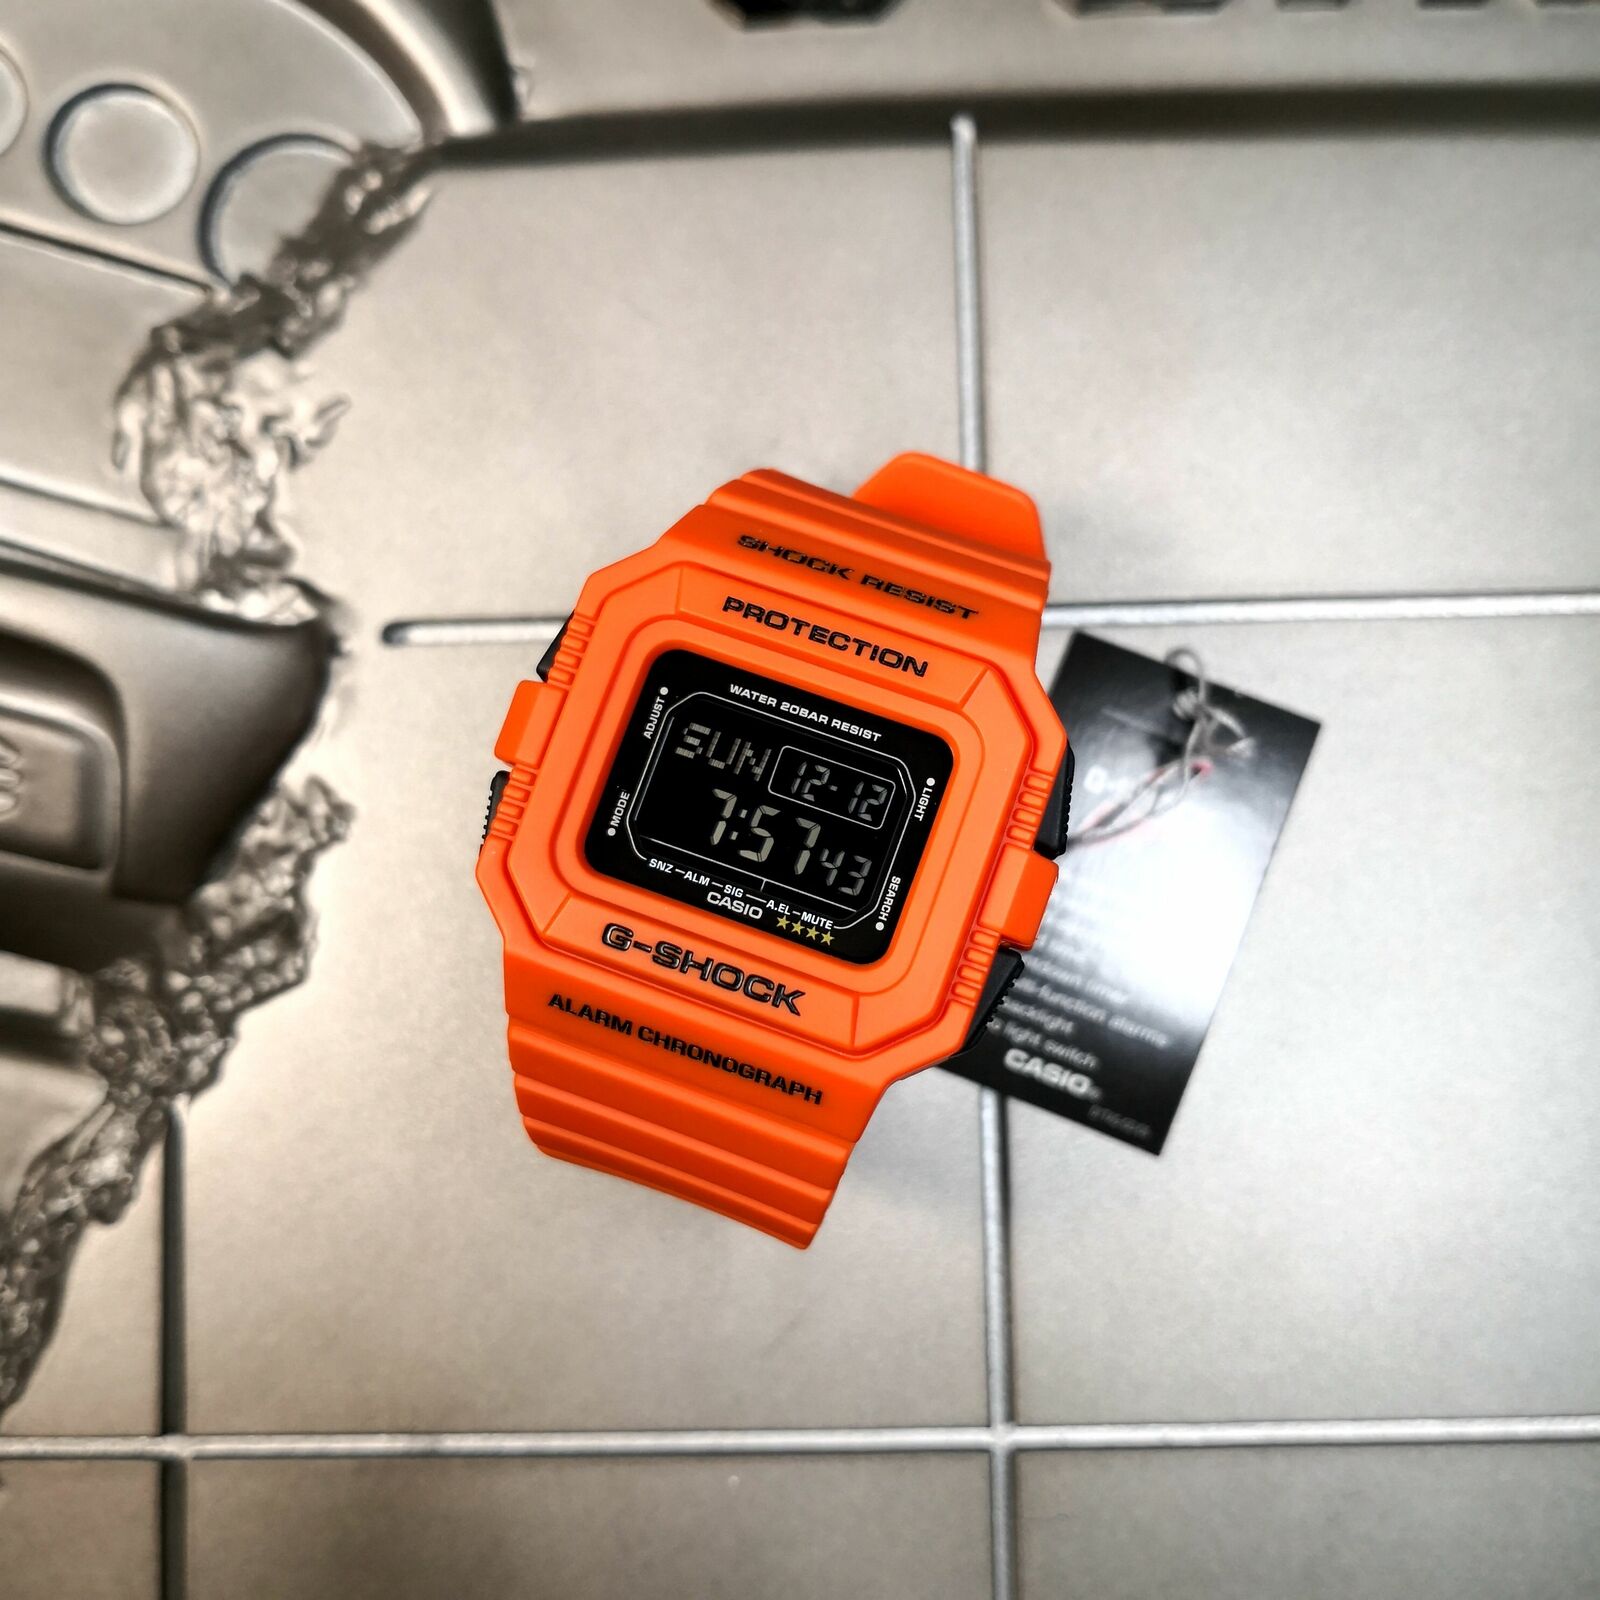 DW-D5500MR-4 Casio G-Shock Rescue Orange Series Digital Men's 